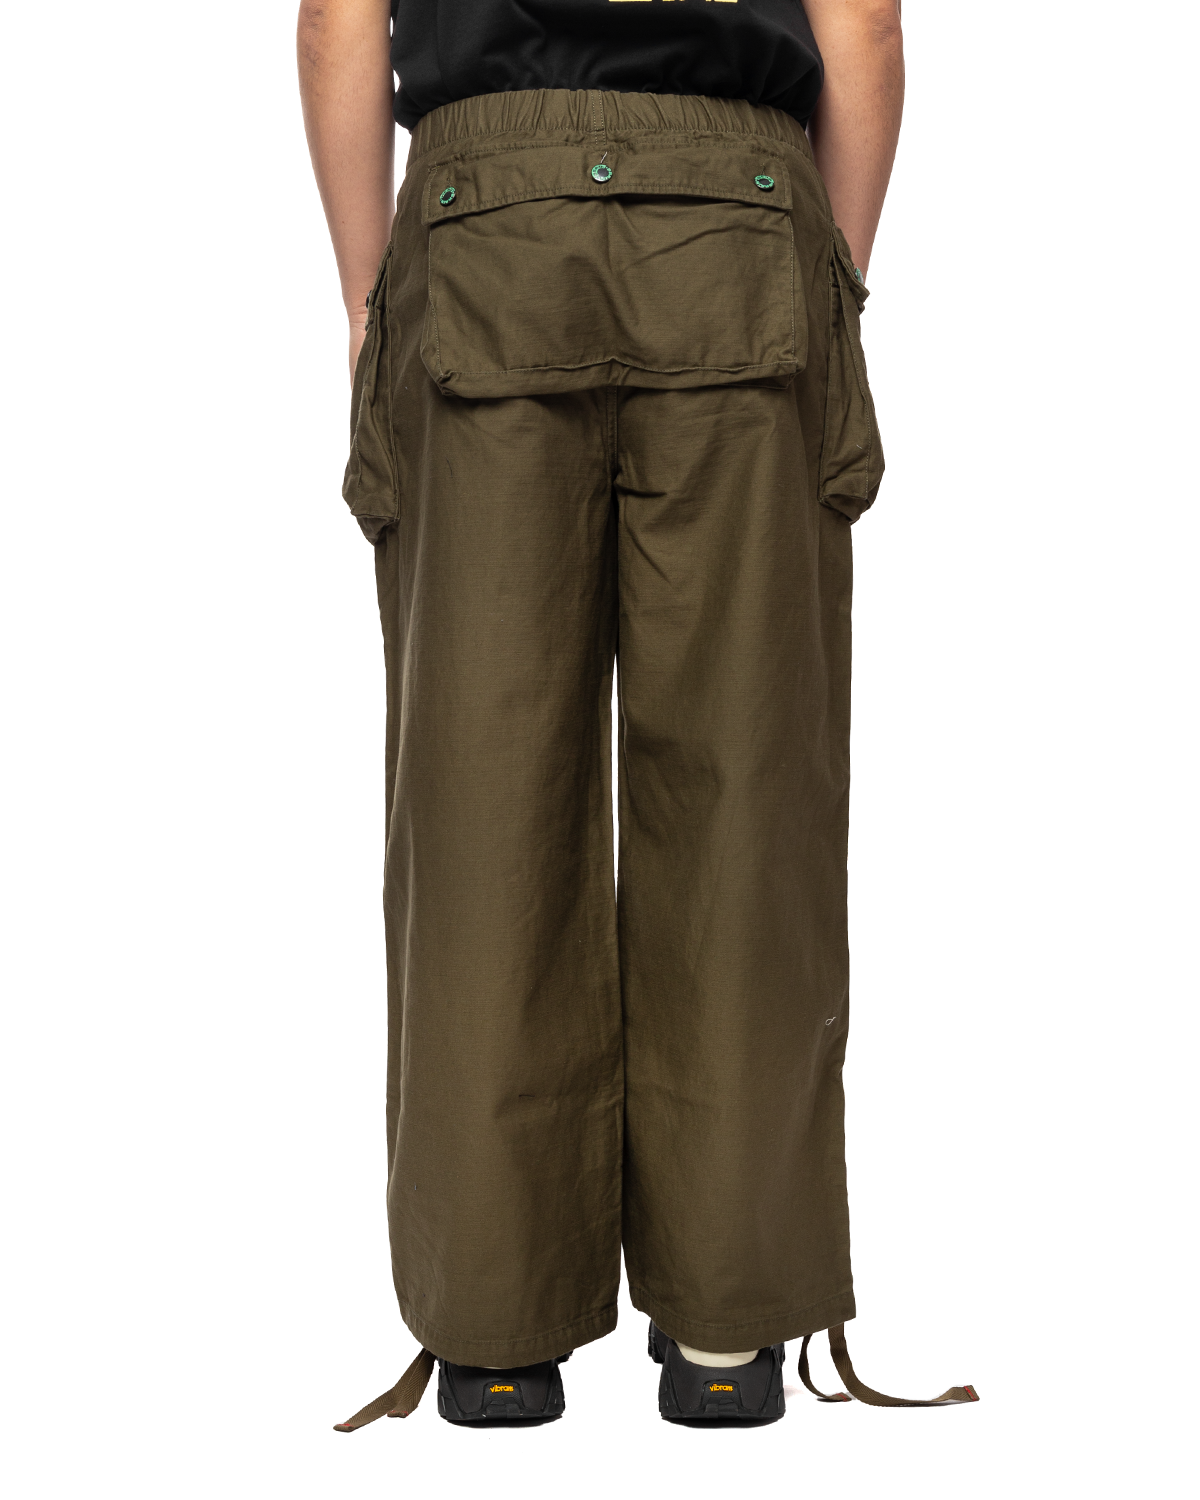 Military Cloth P44 Jungle Pant Olive